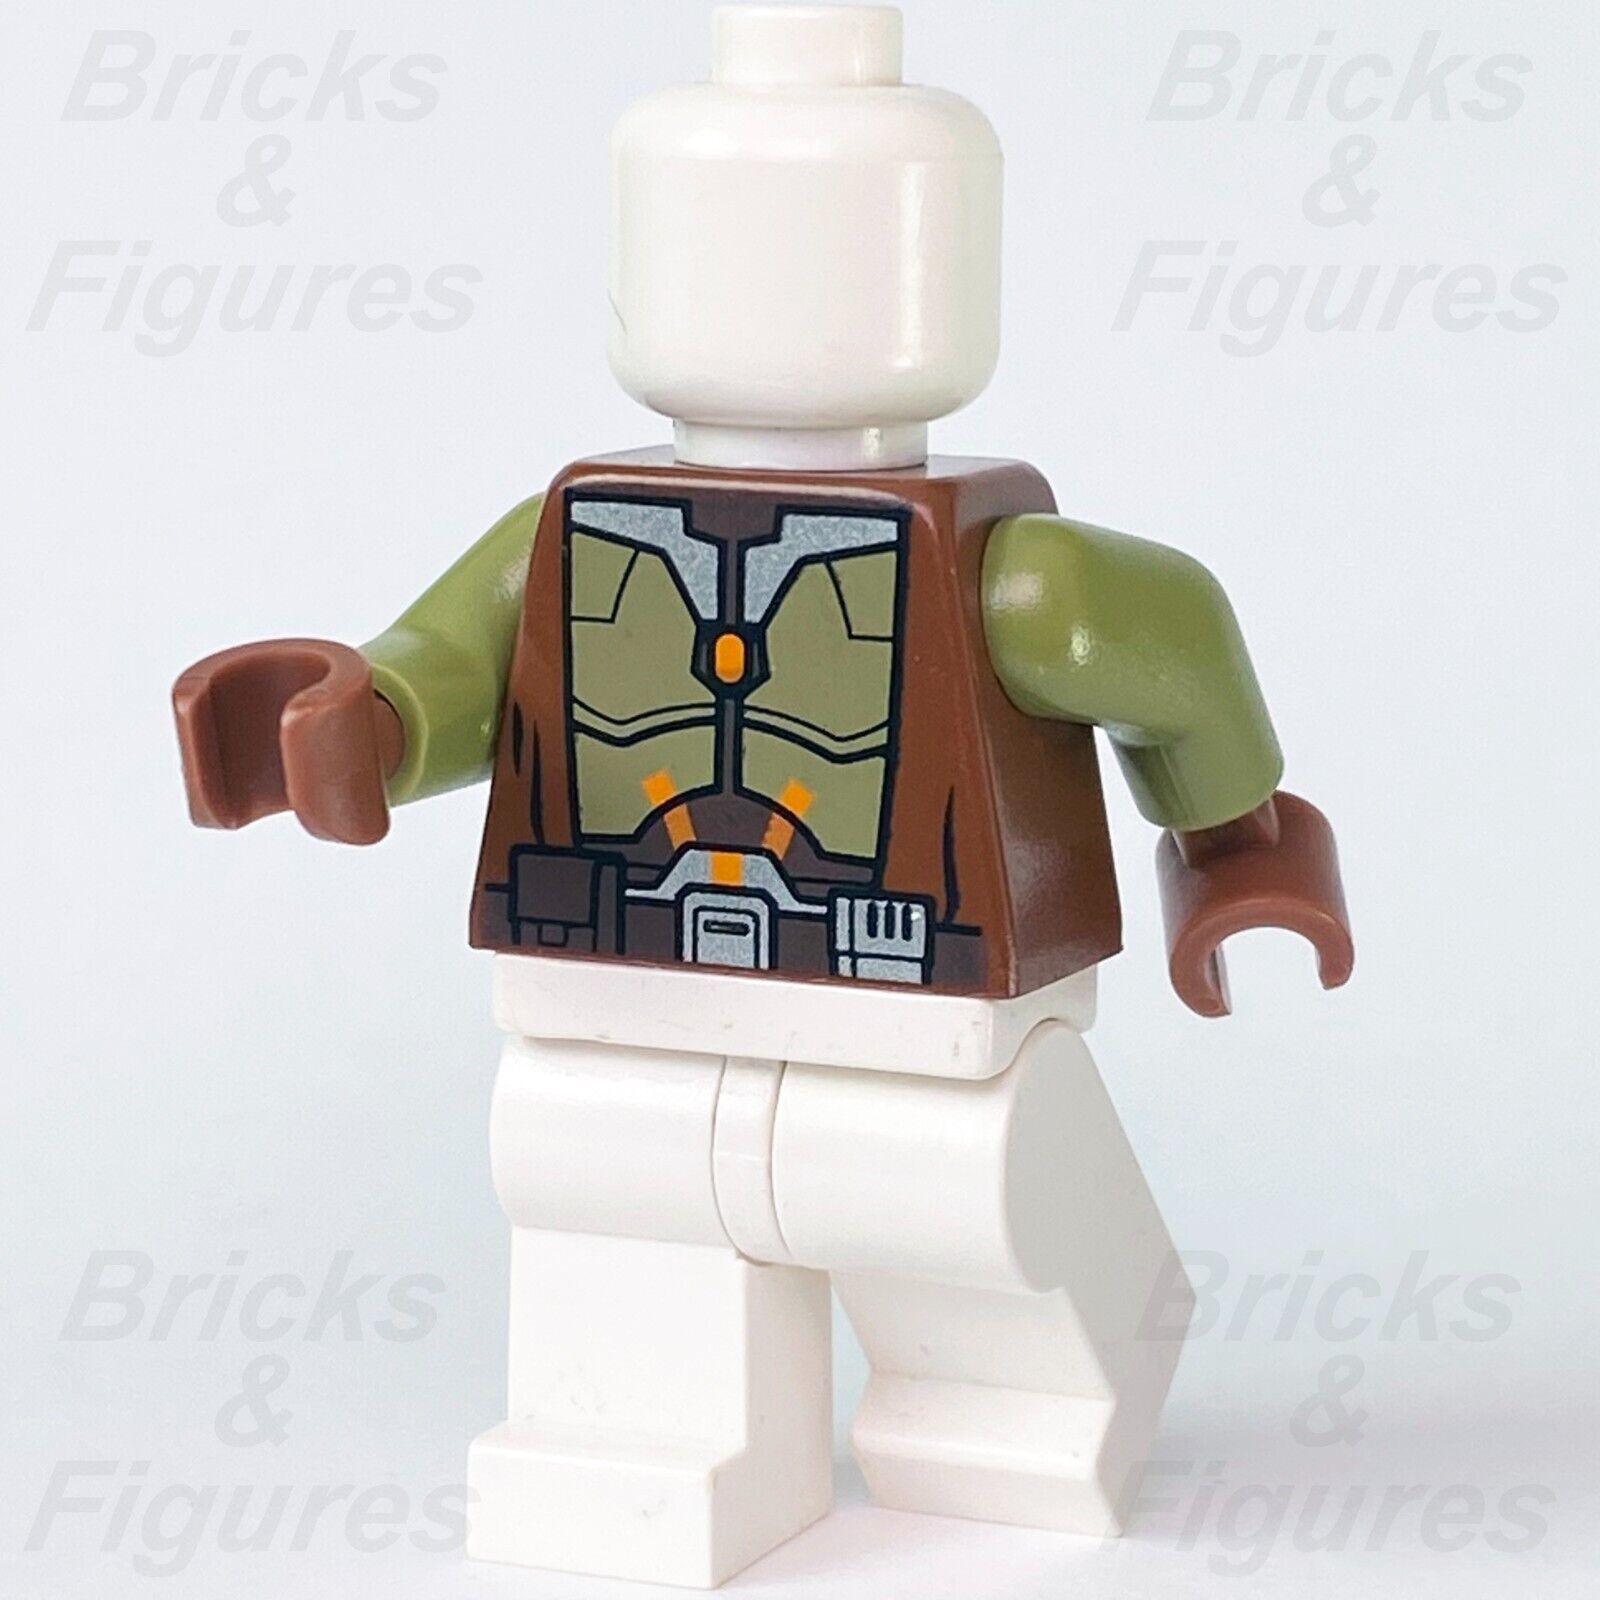 LEGO Star Wars Jedi Knight Torso Minifigure Part The Old Republic Armour 75025